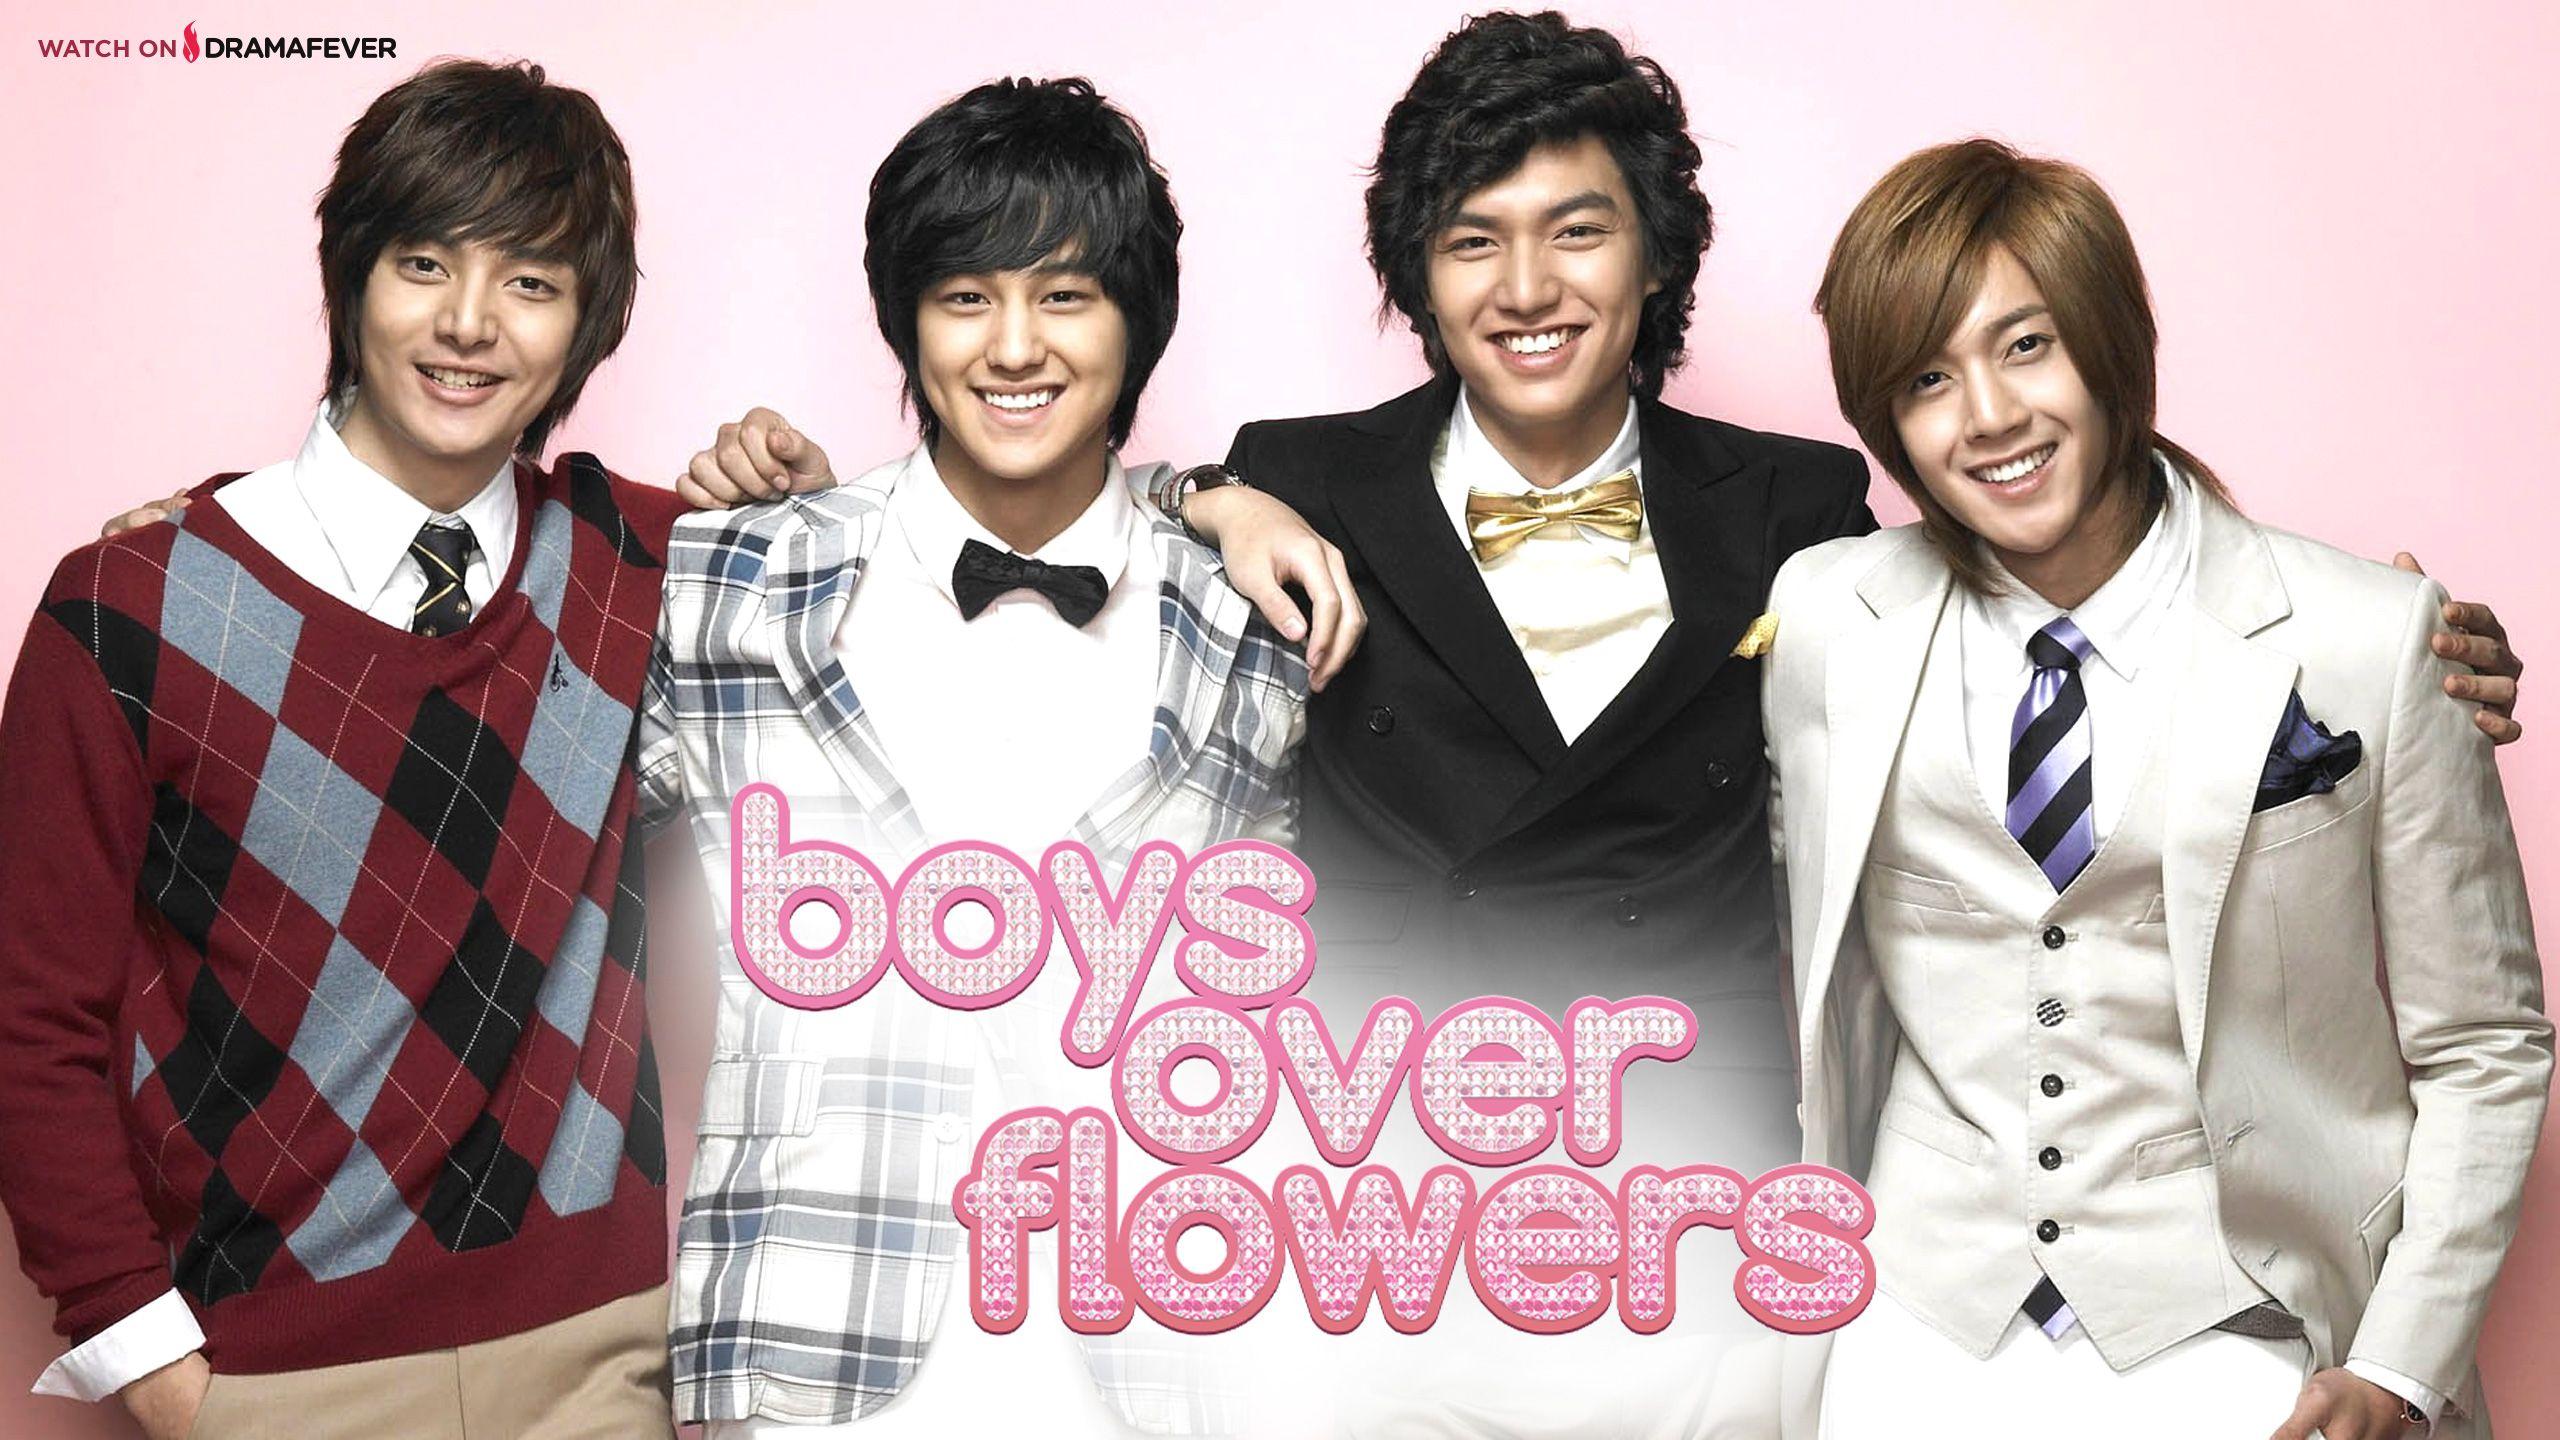 Download Boys Over Flowers wallpaper for your desktop, iPhone